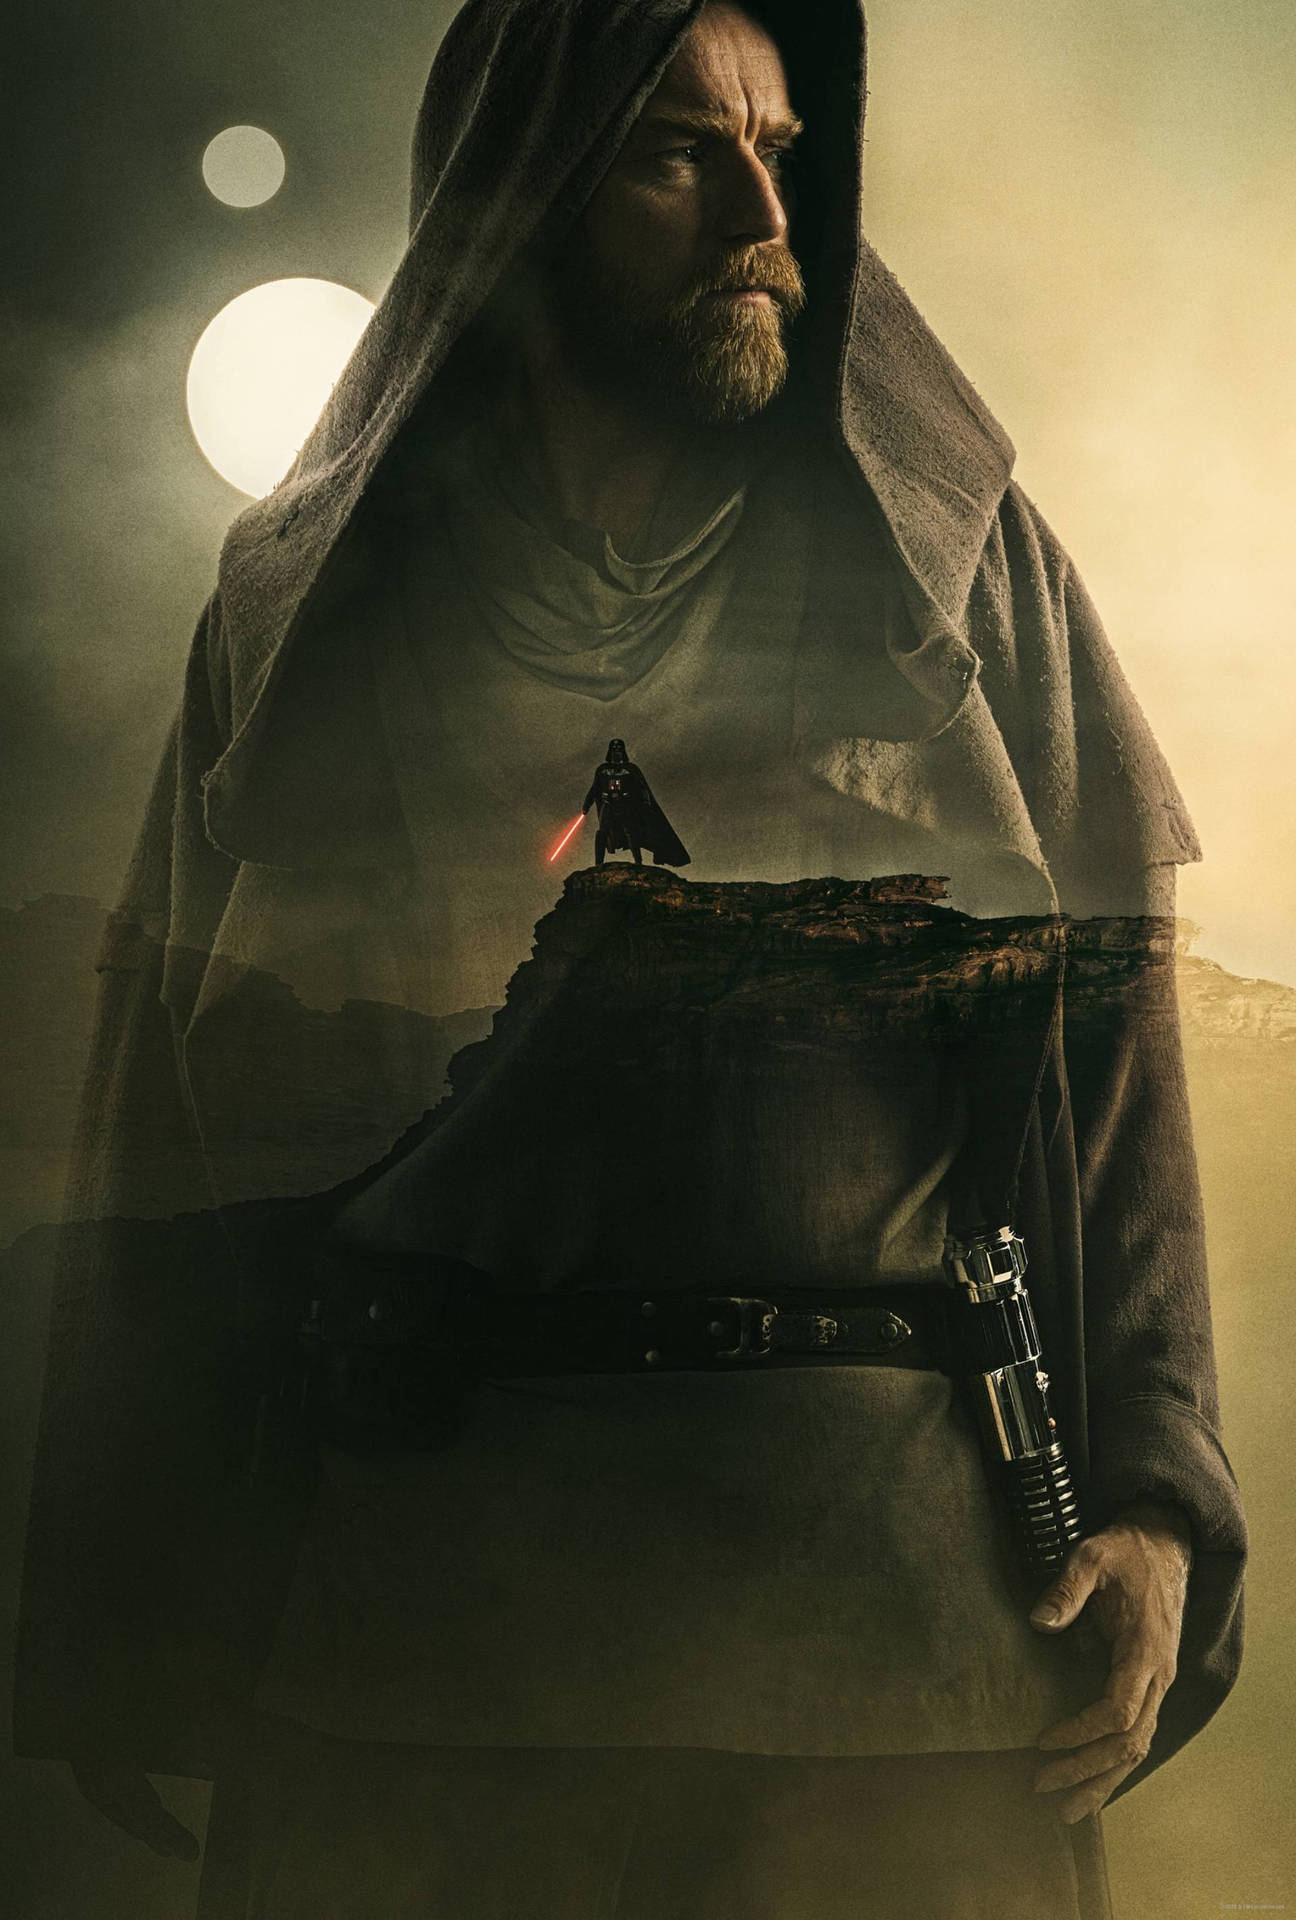 Obi Wan Kenobi Double-exposure Poster Background